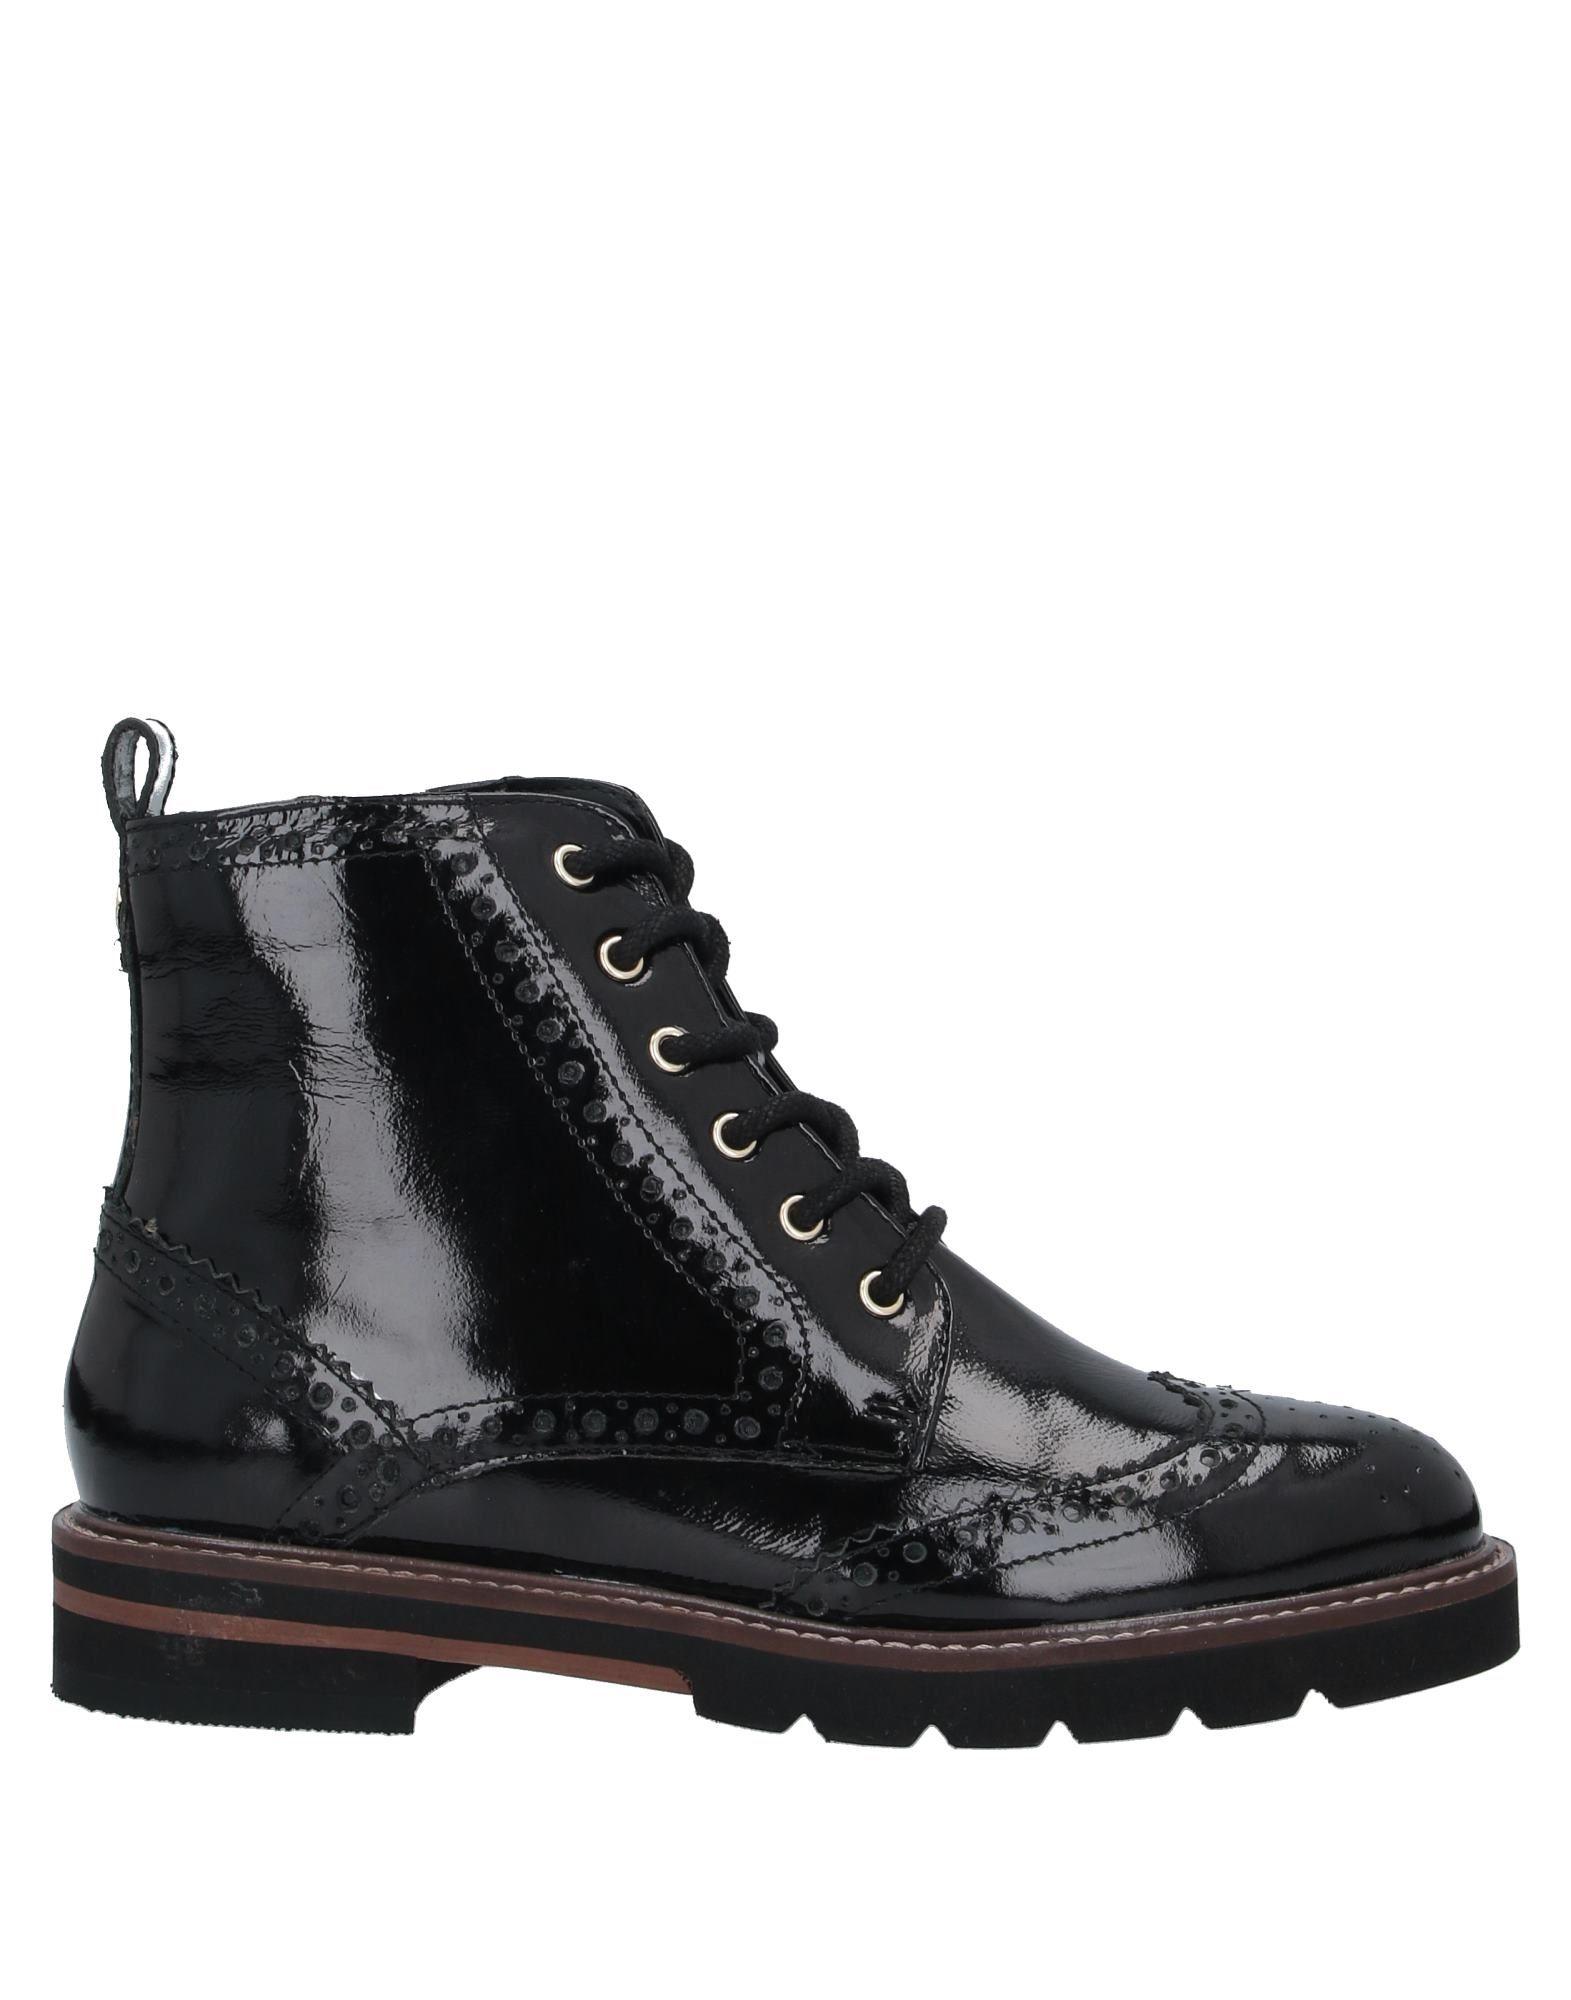 Carvela Kurt Geiger Leather Ankle Boots in Black - Lyst